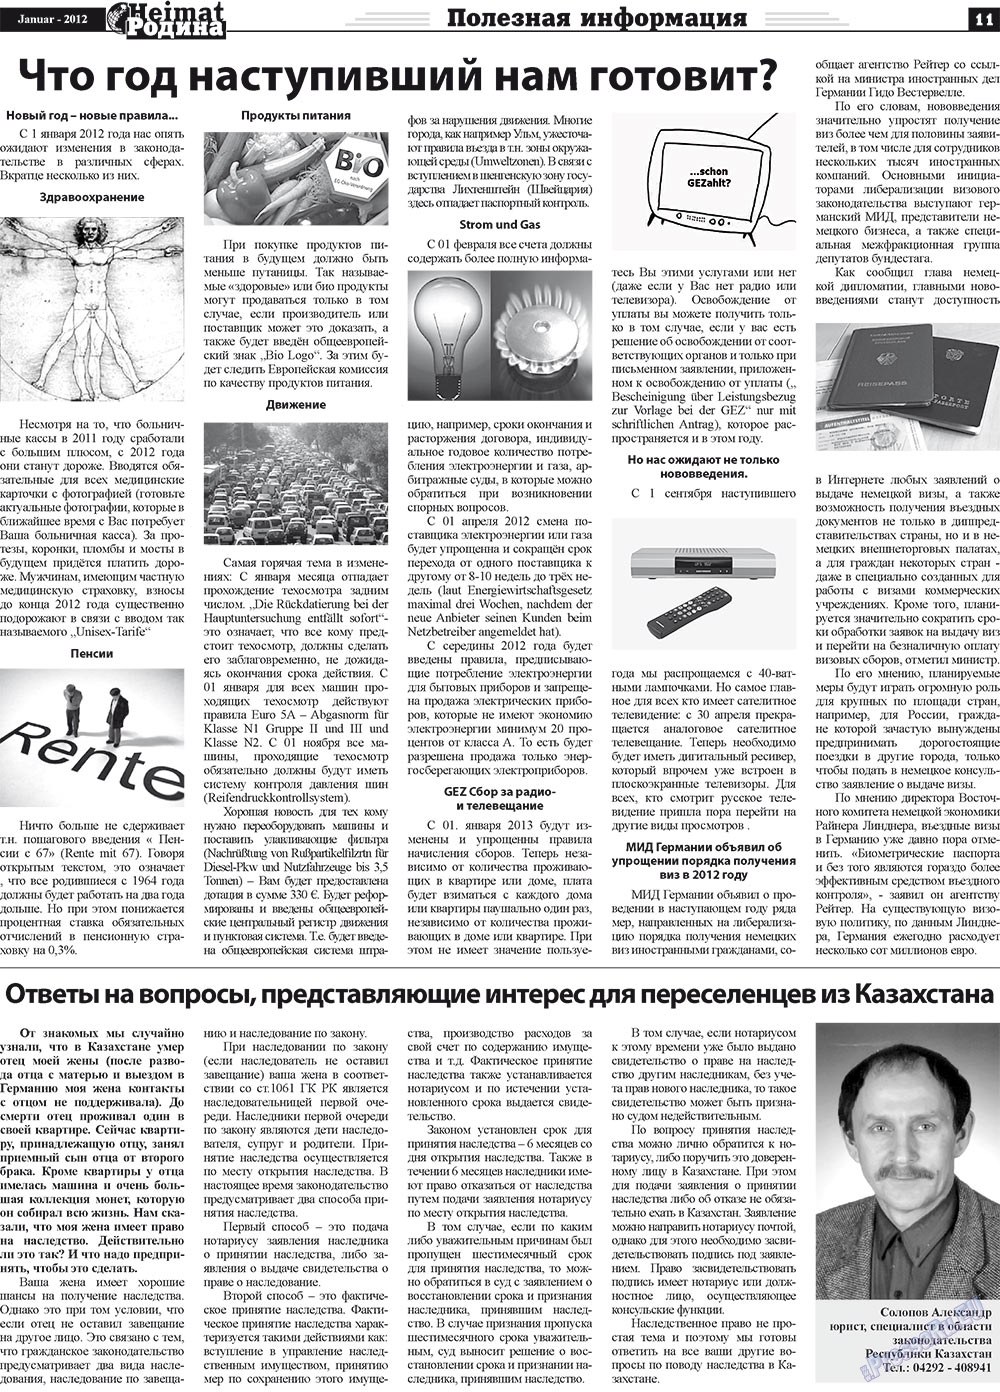 Heimat-Родина, газета. 2012 №1 стр.11